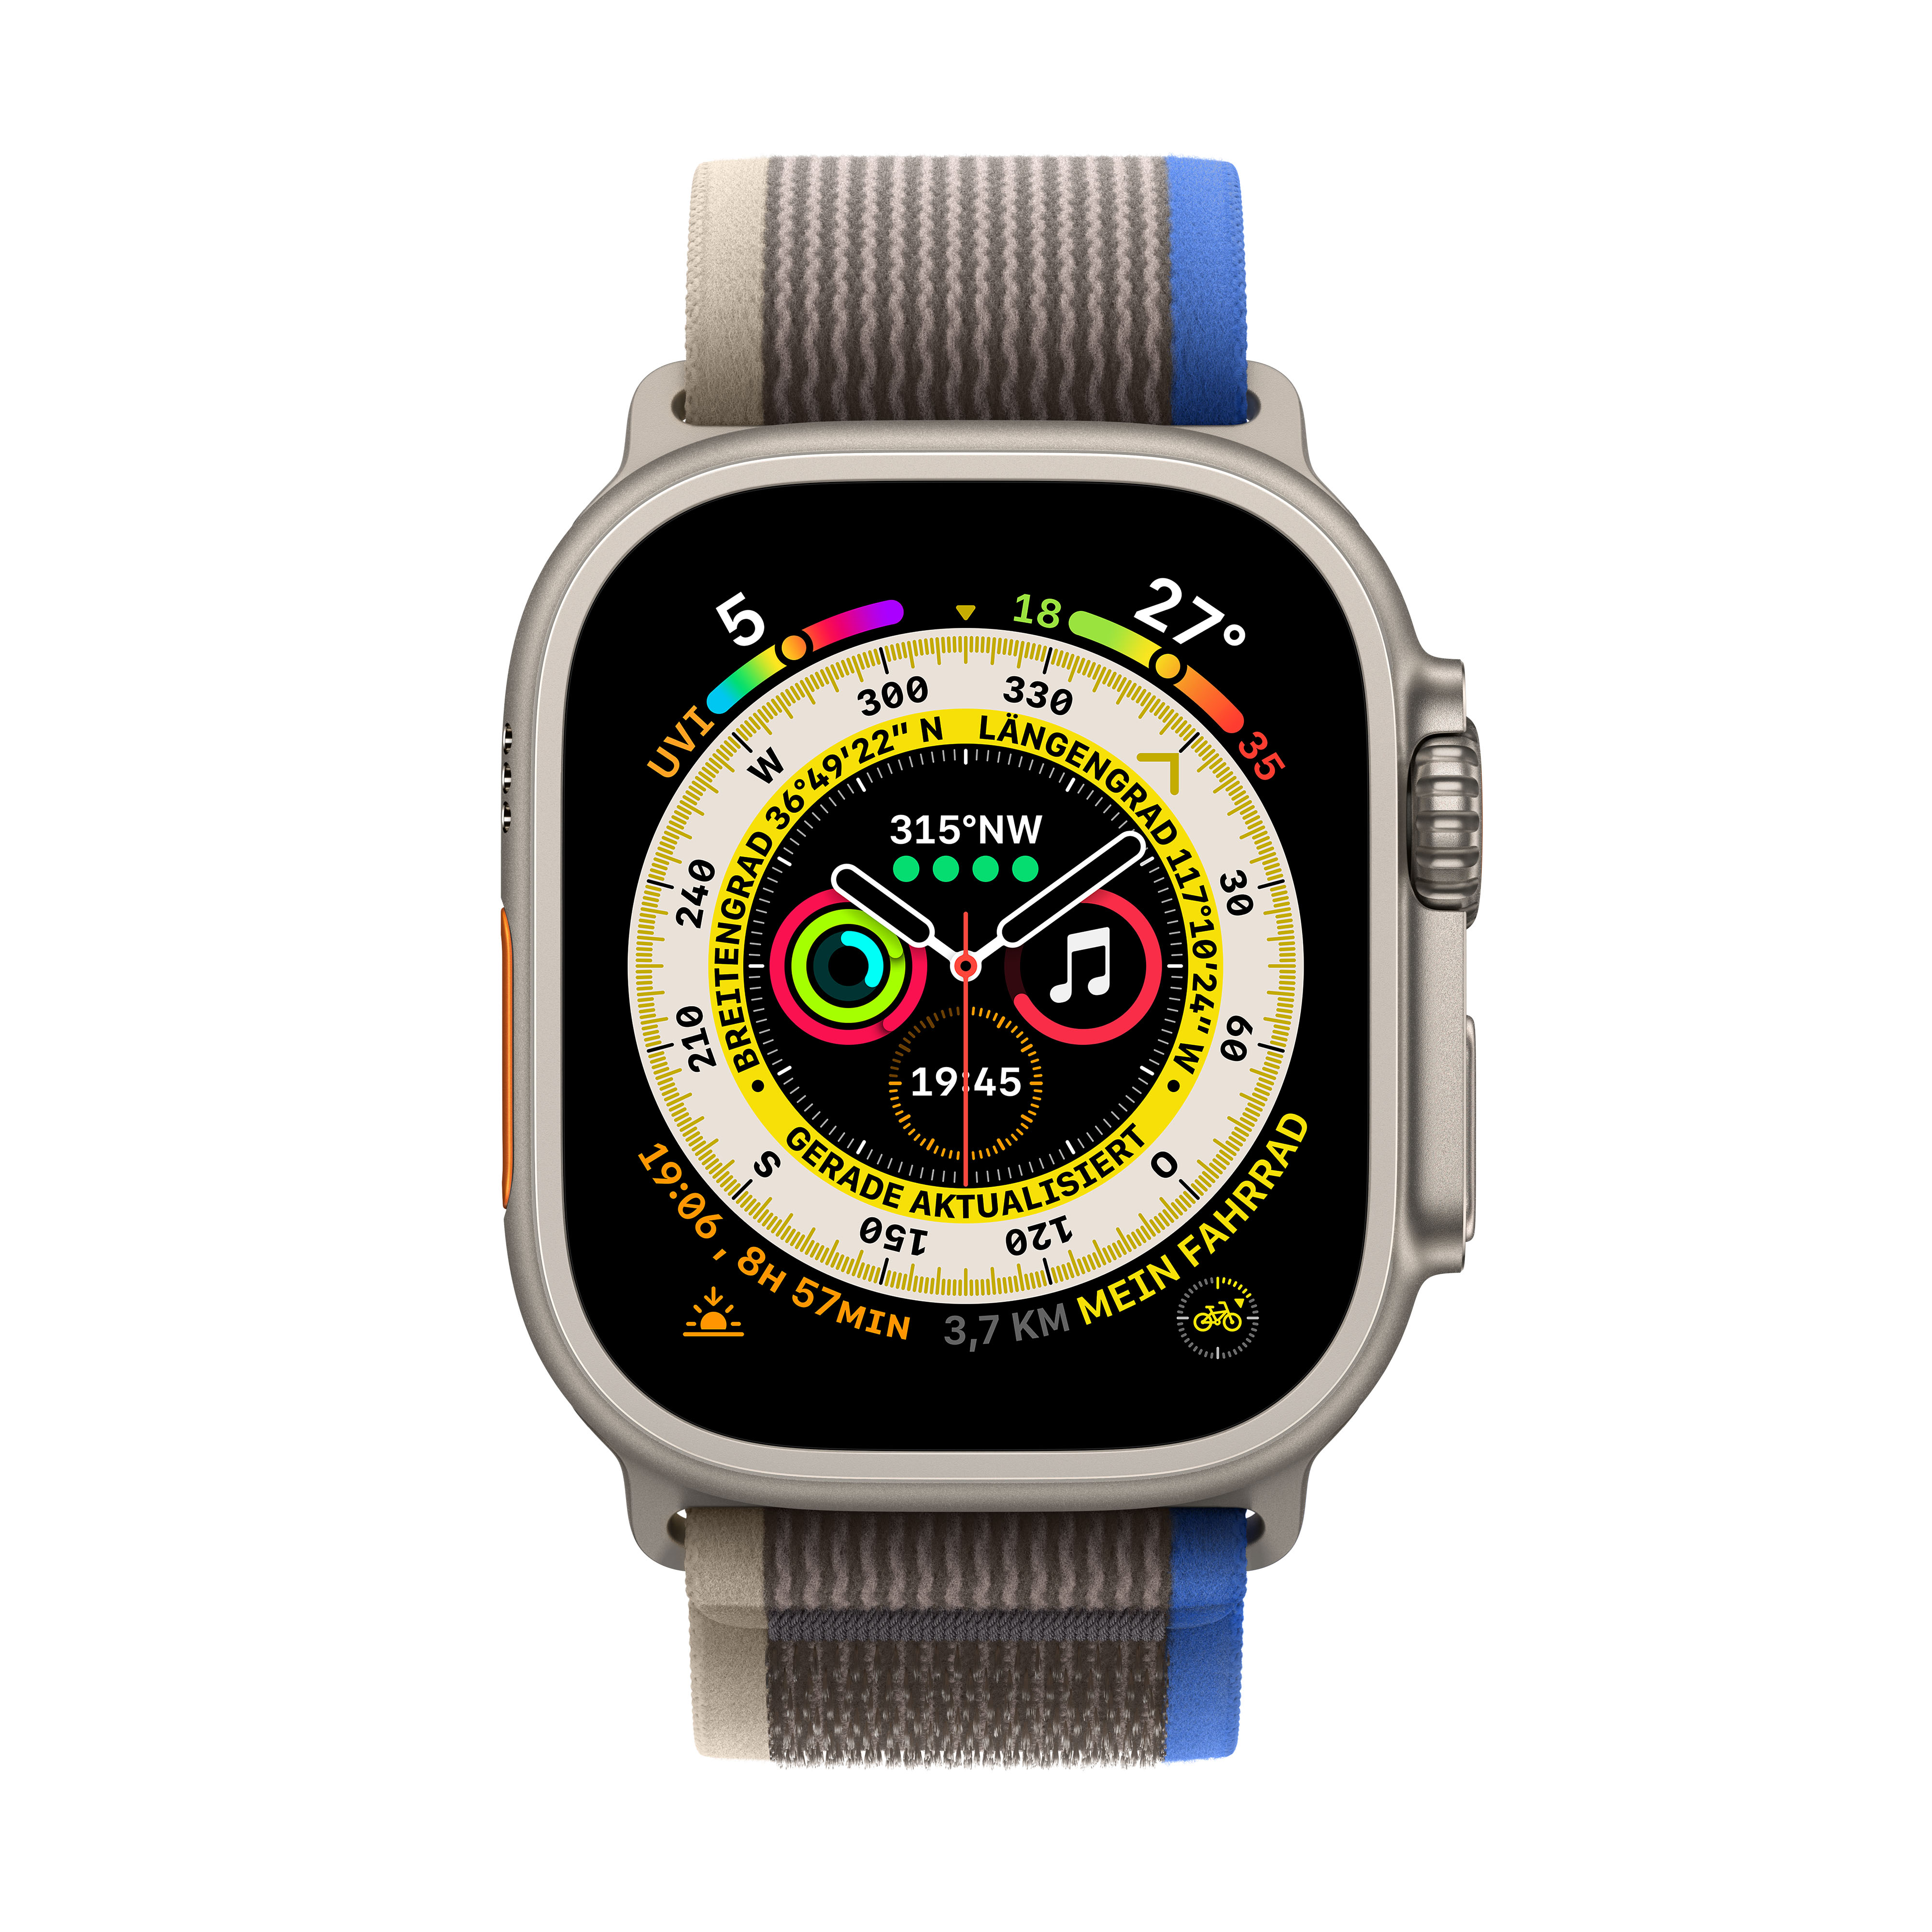 180 Titan W Watch mm, GPS+CEL TIT APPLE Nylon/Gewebe, TRAIL S/M Ultra 49 Blau/Grau Smartwatch 130 -